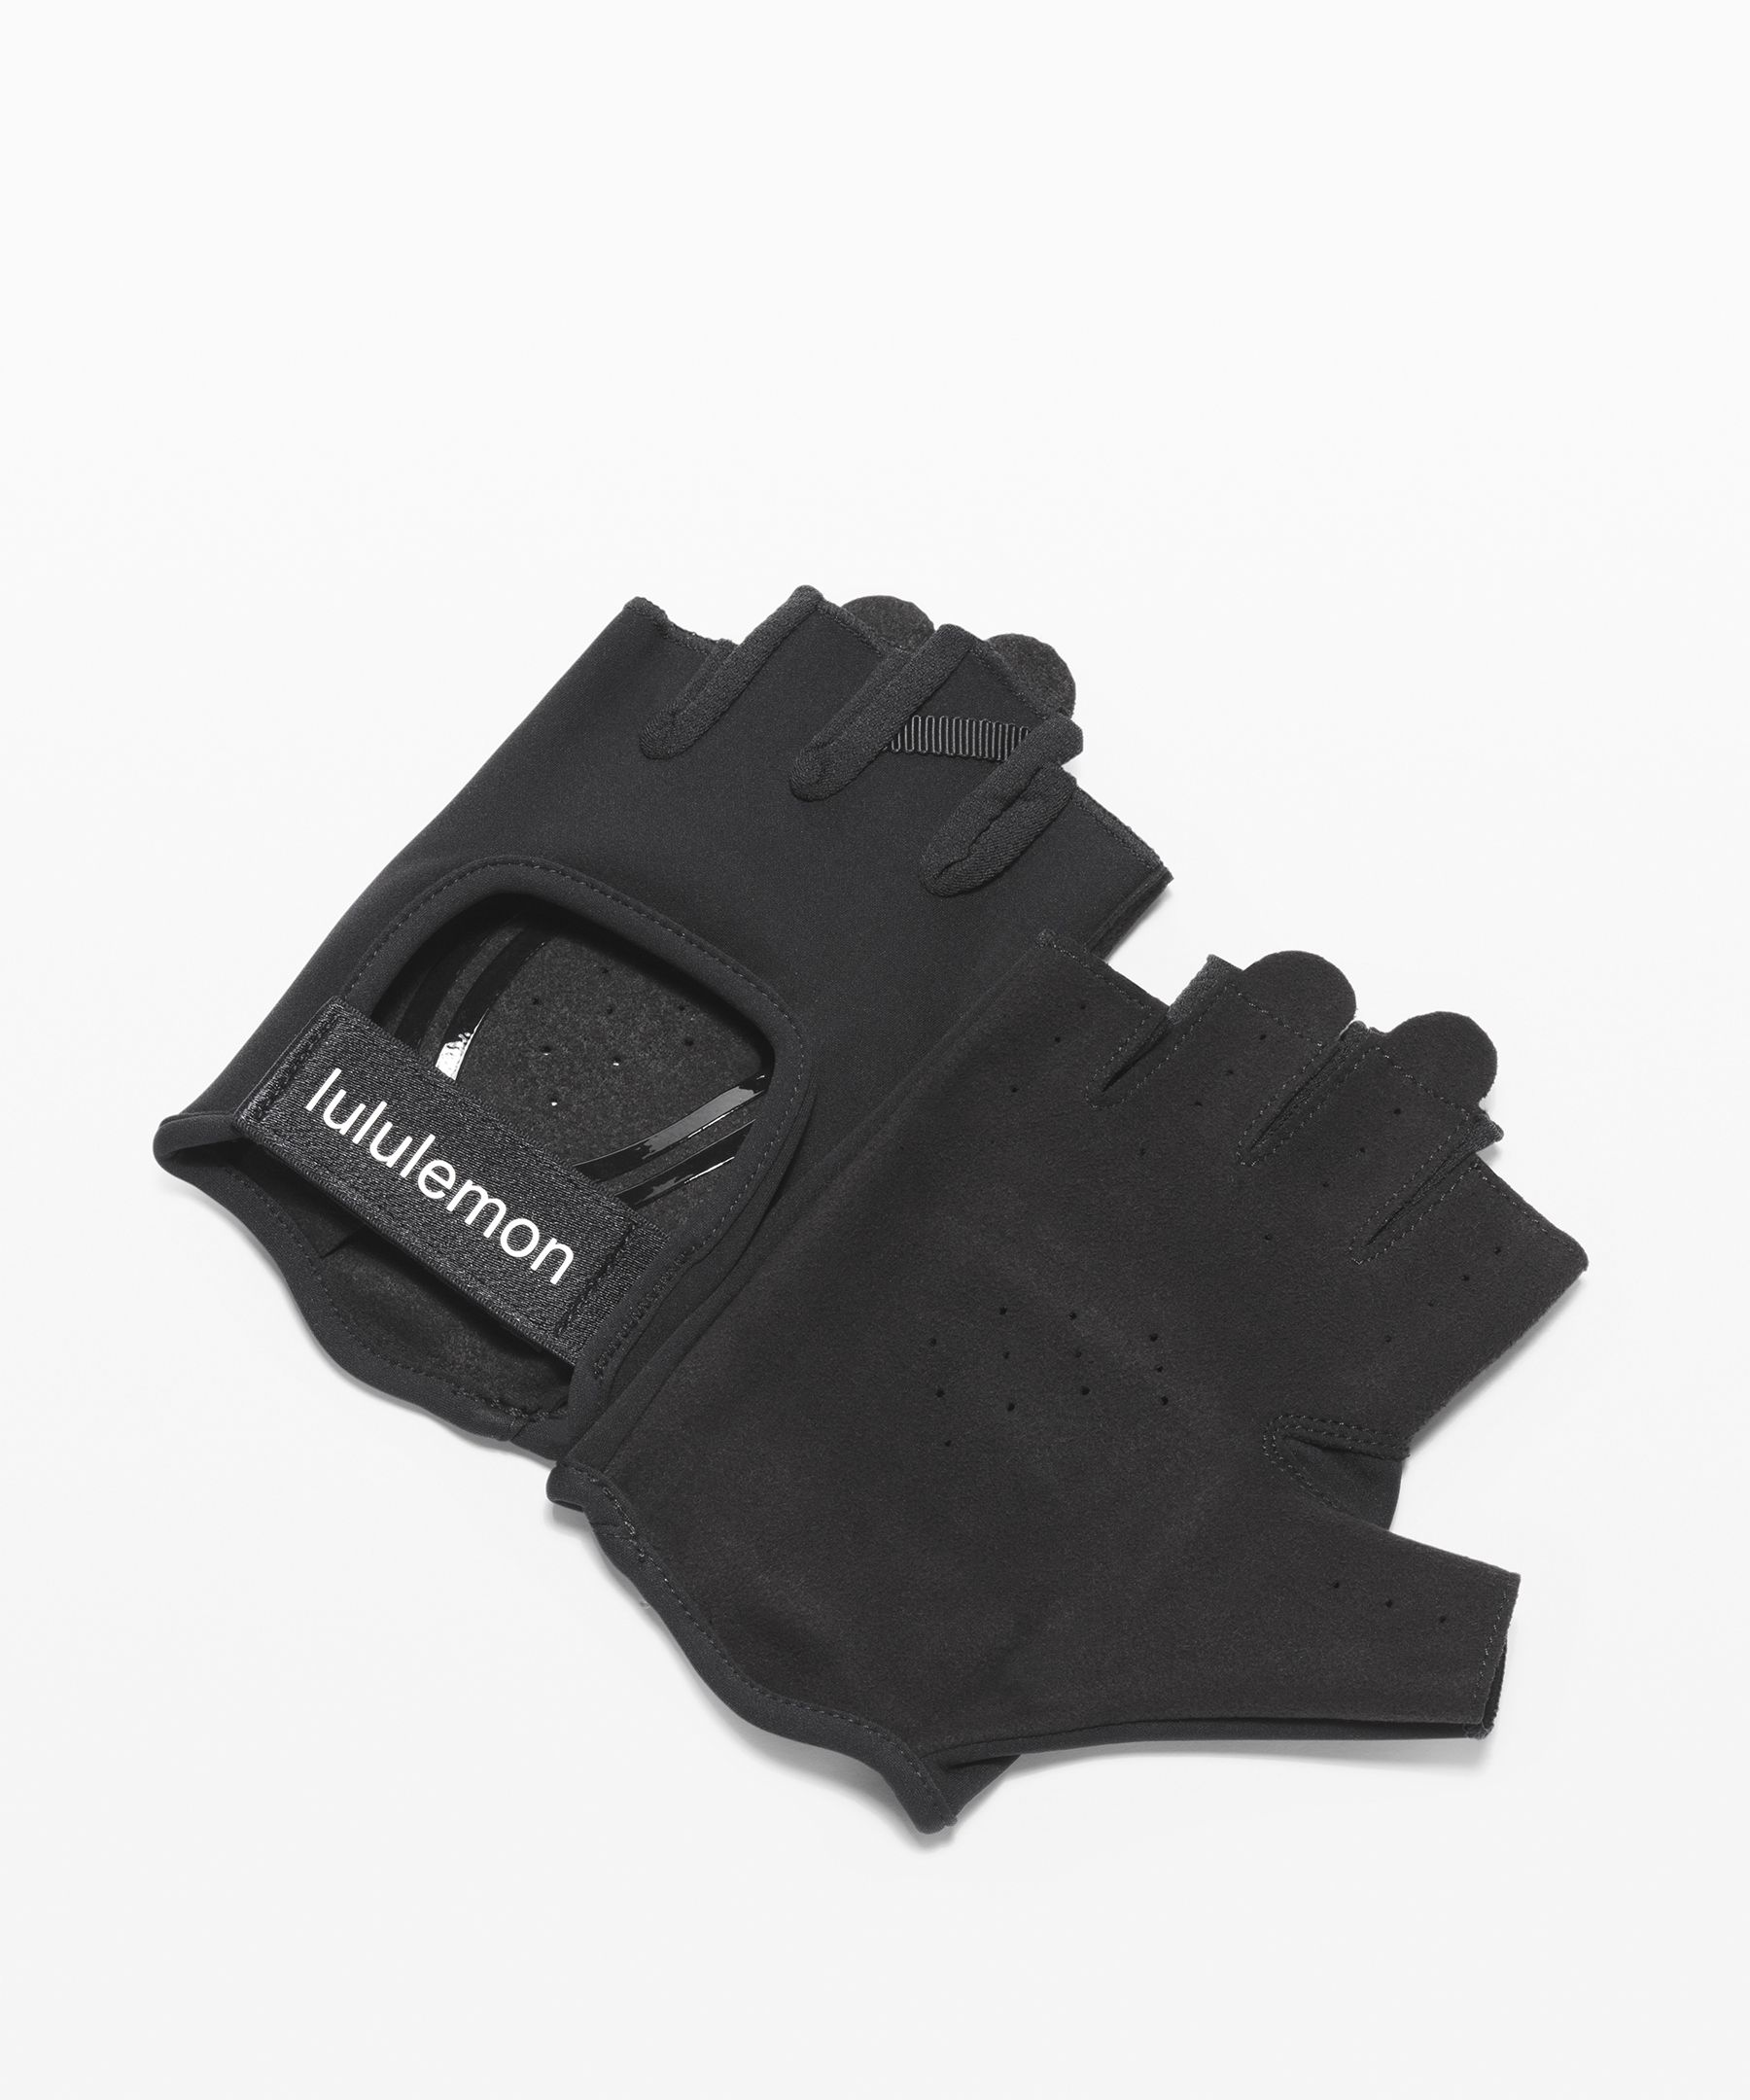 Lululemon Uplift Training Gloves. 2